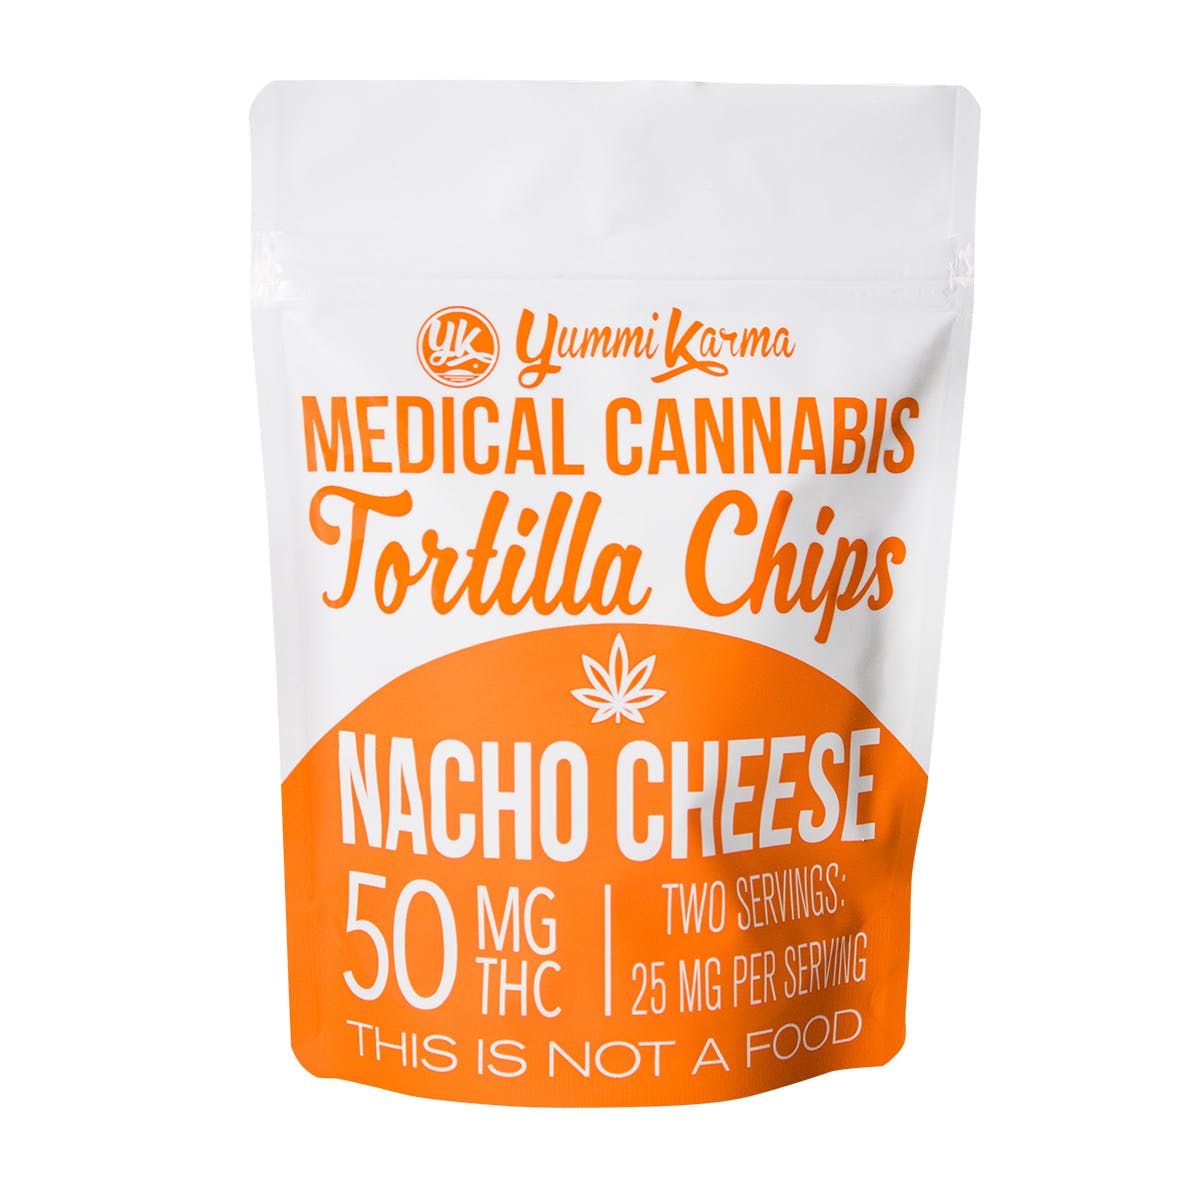 marijuana-dispensaries-natural-healing-remedies-in-bakersfield-medical-cannabis-tortilla-chips-2c-nacho-cheese-50mg